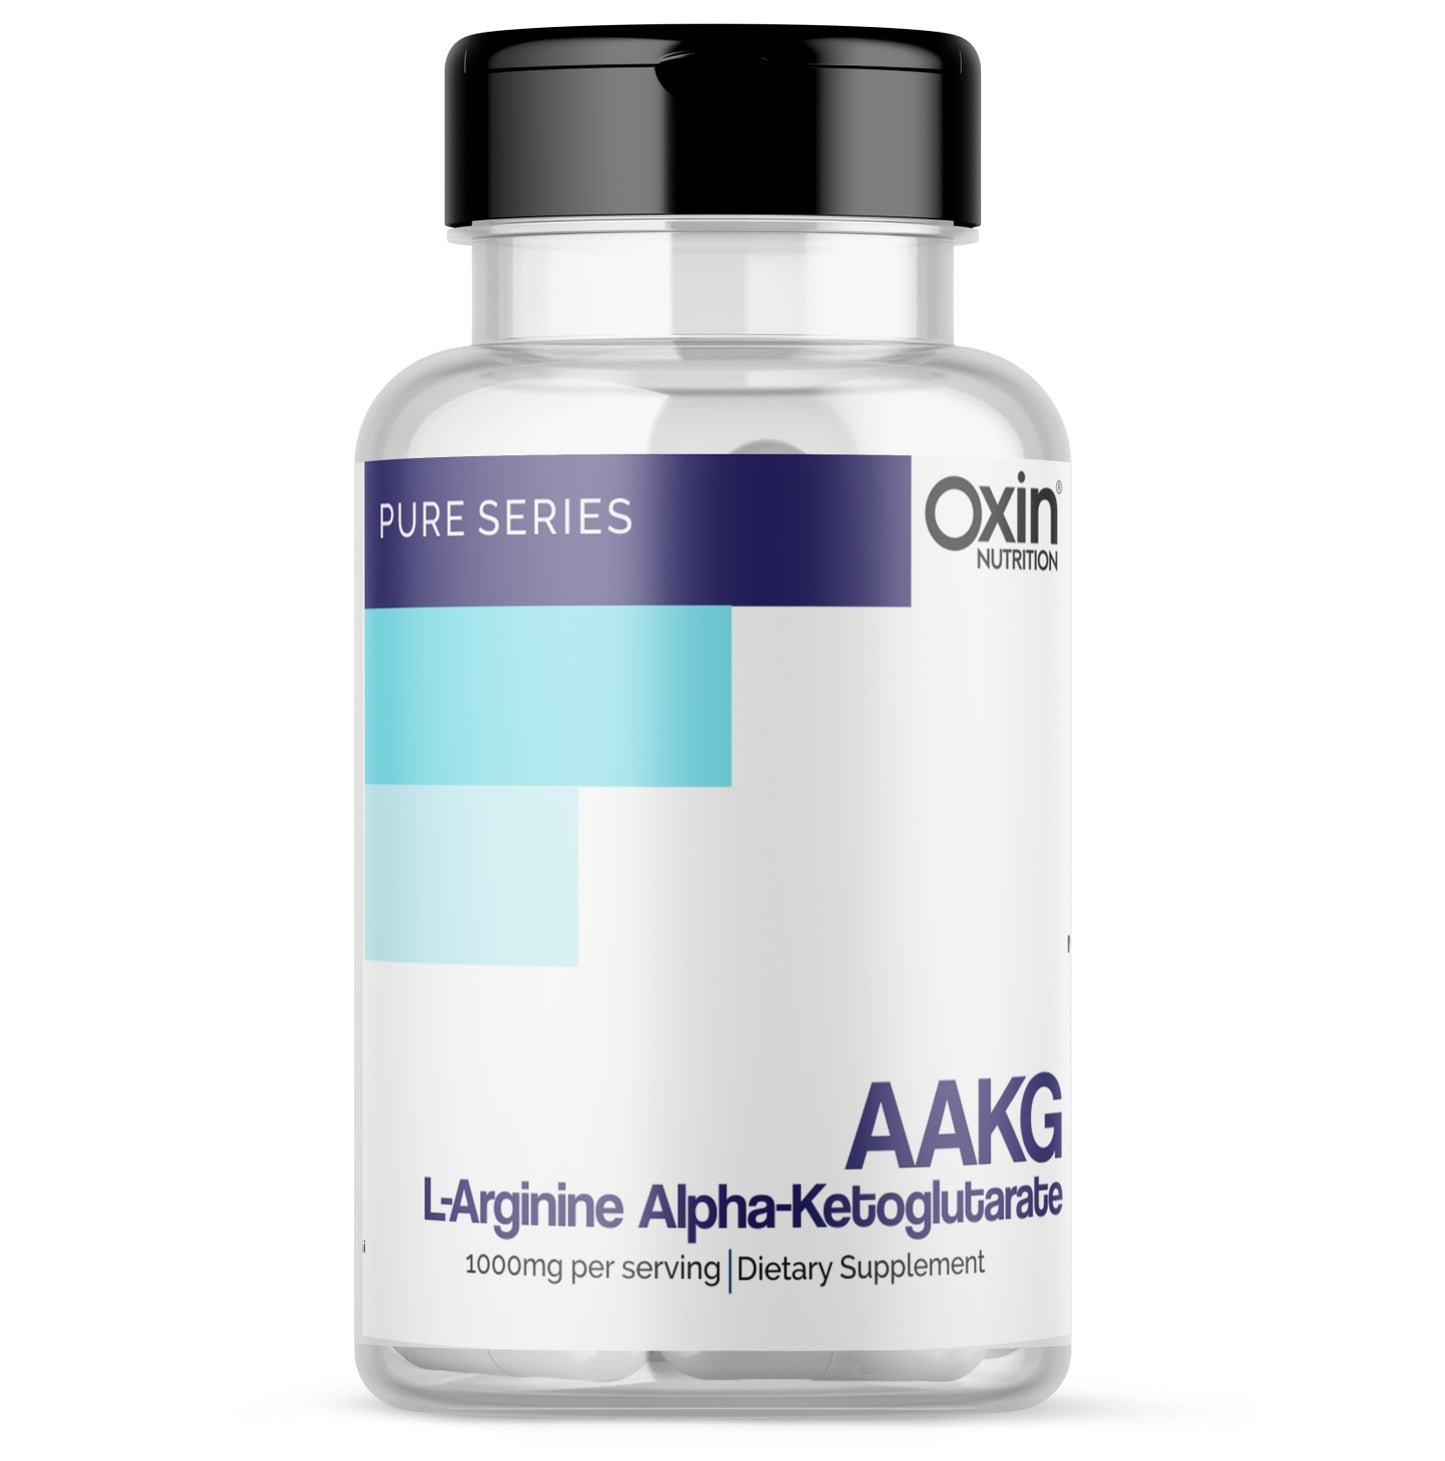 Oxin® Nutrition L-Arginine Alpha-Ketoglutarate 1000mg Capsule